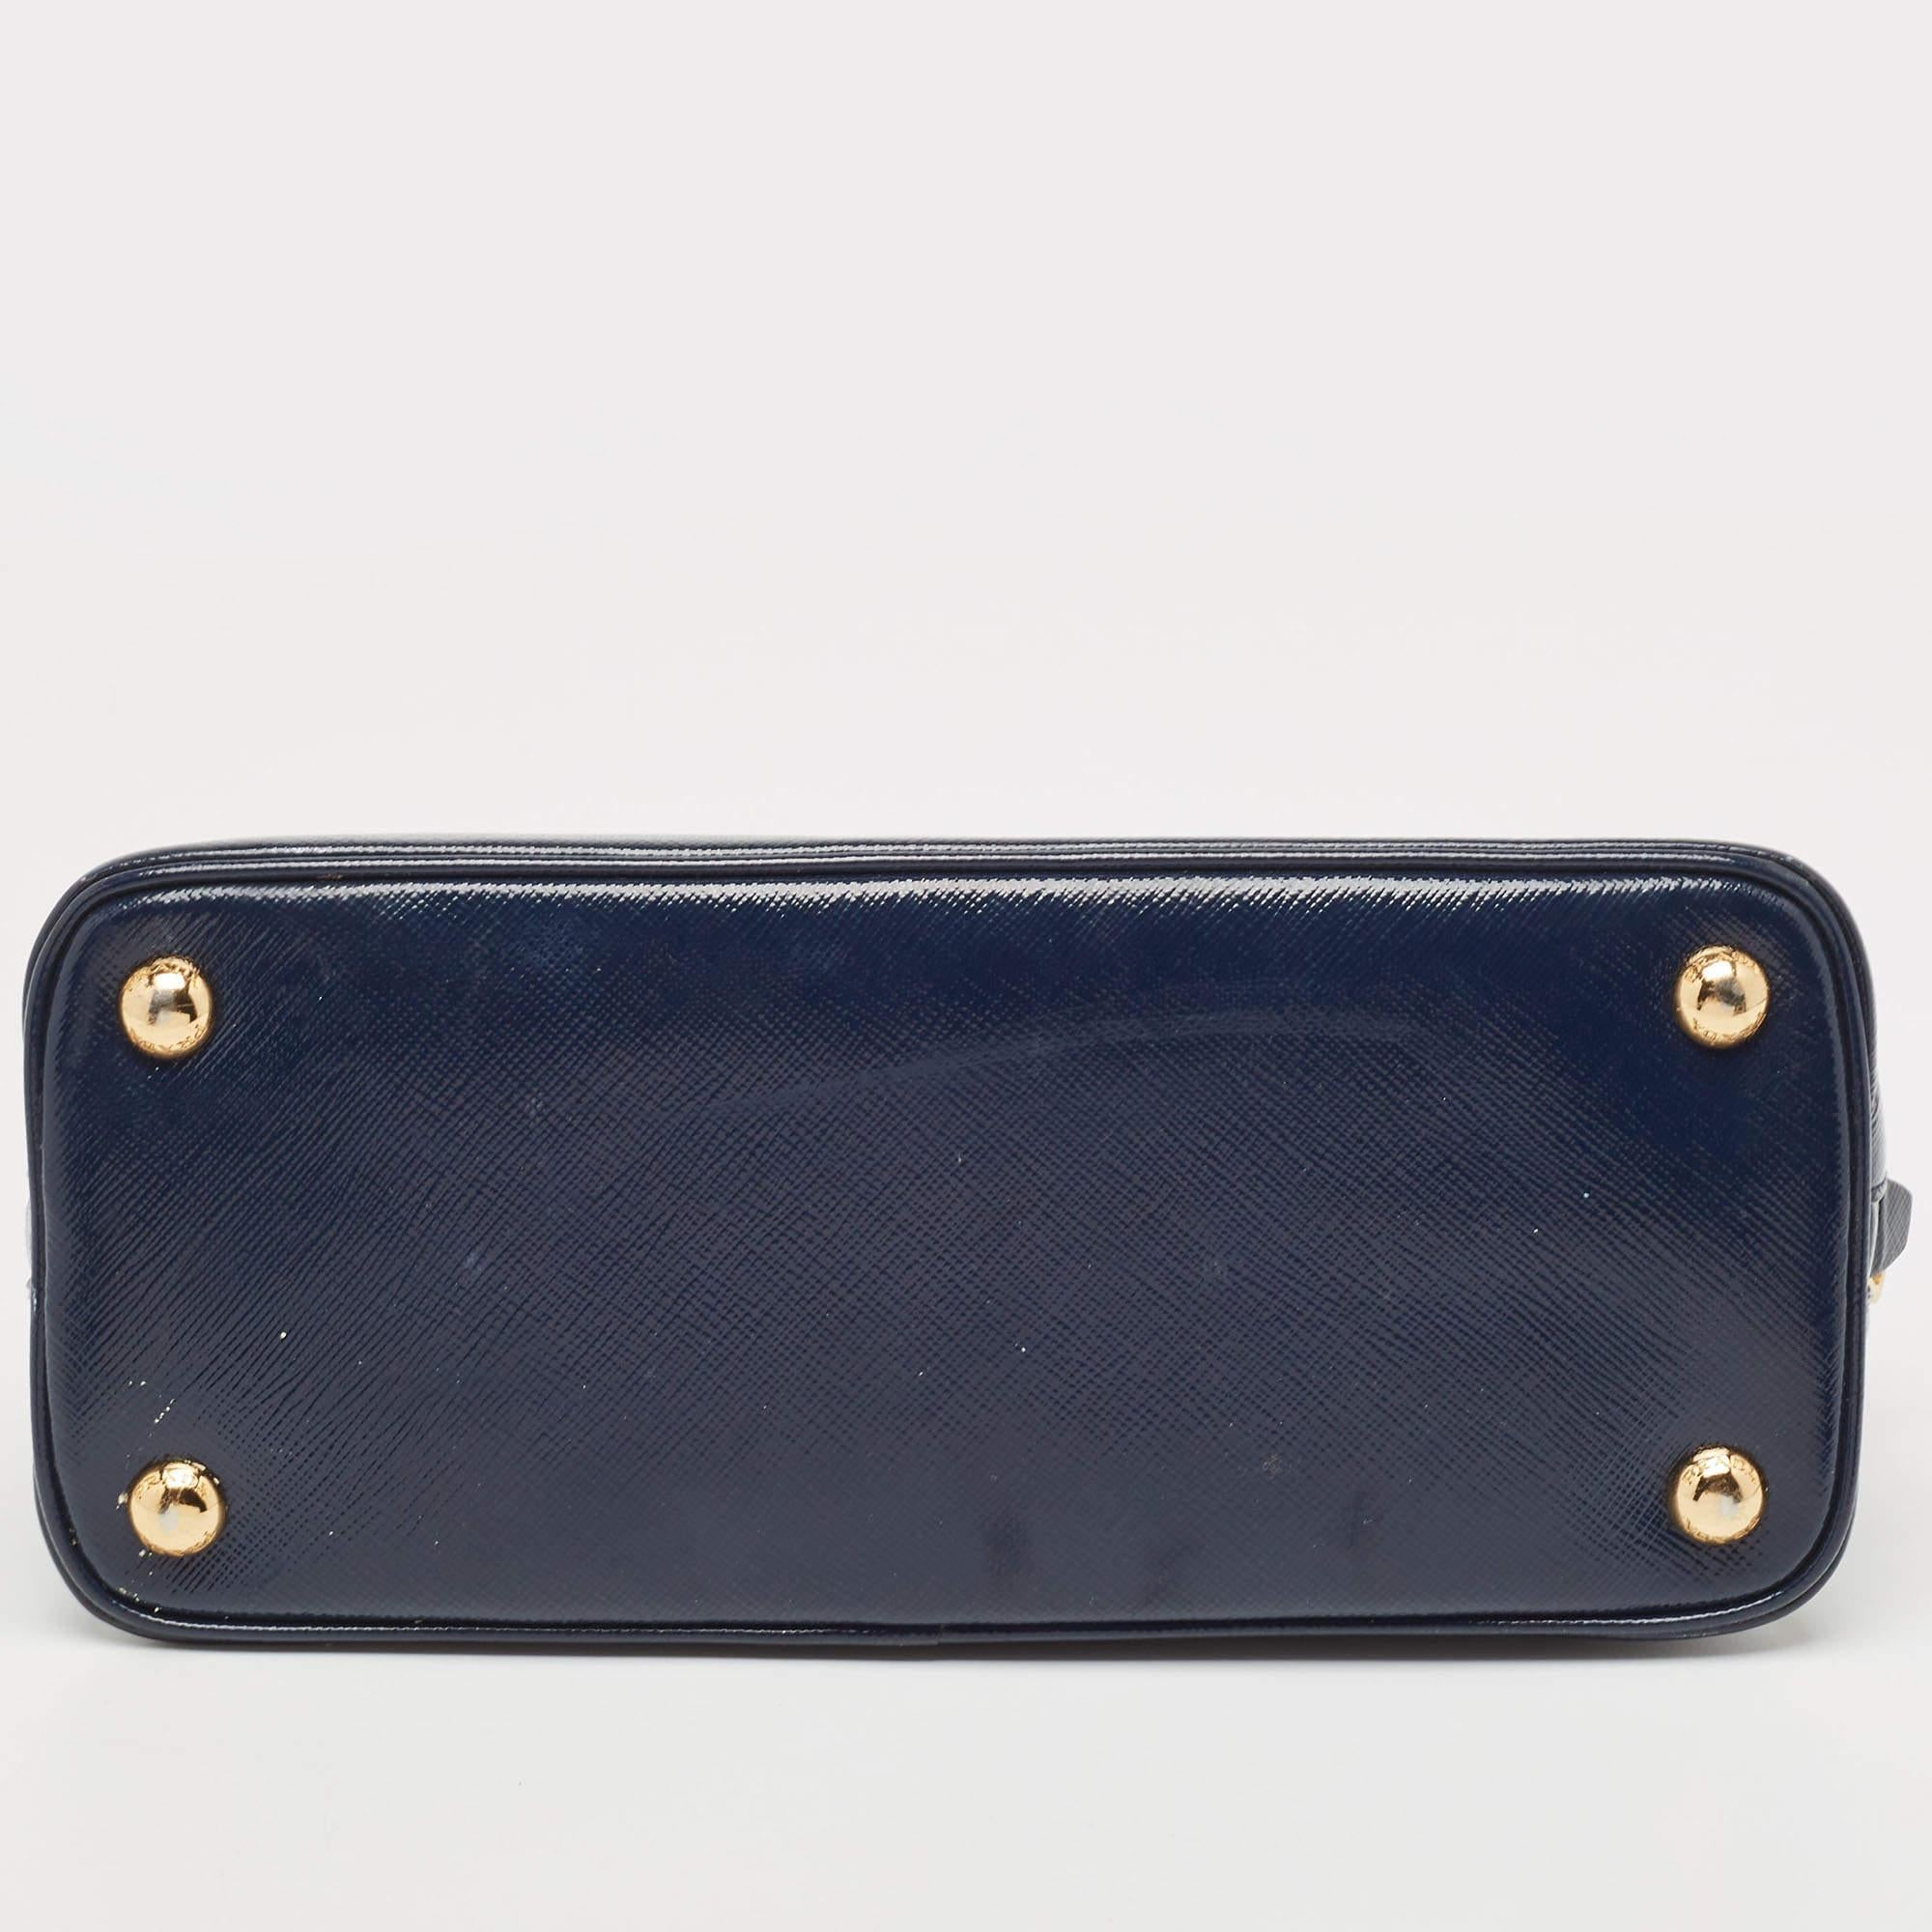 Prada Navy Blue Saffiano Patent Leather Small Promenade Satchel For Sale 1